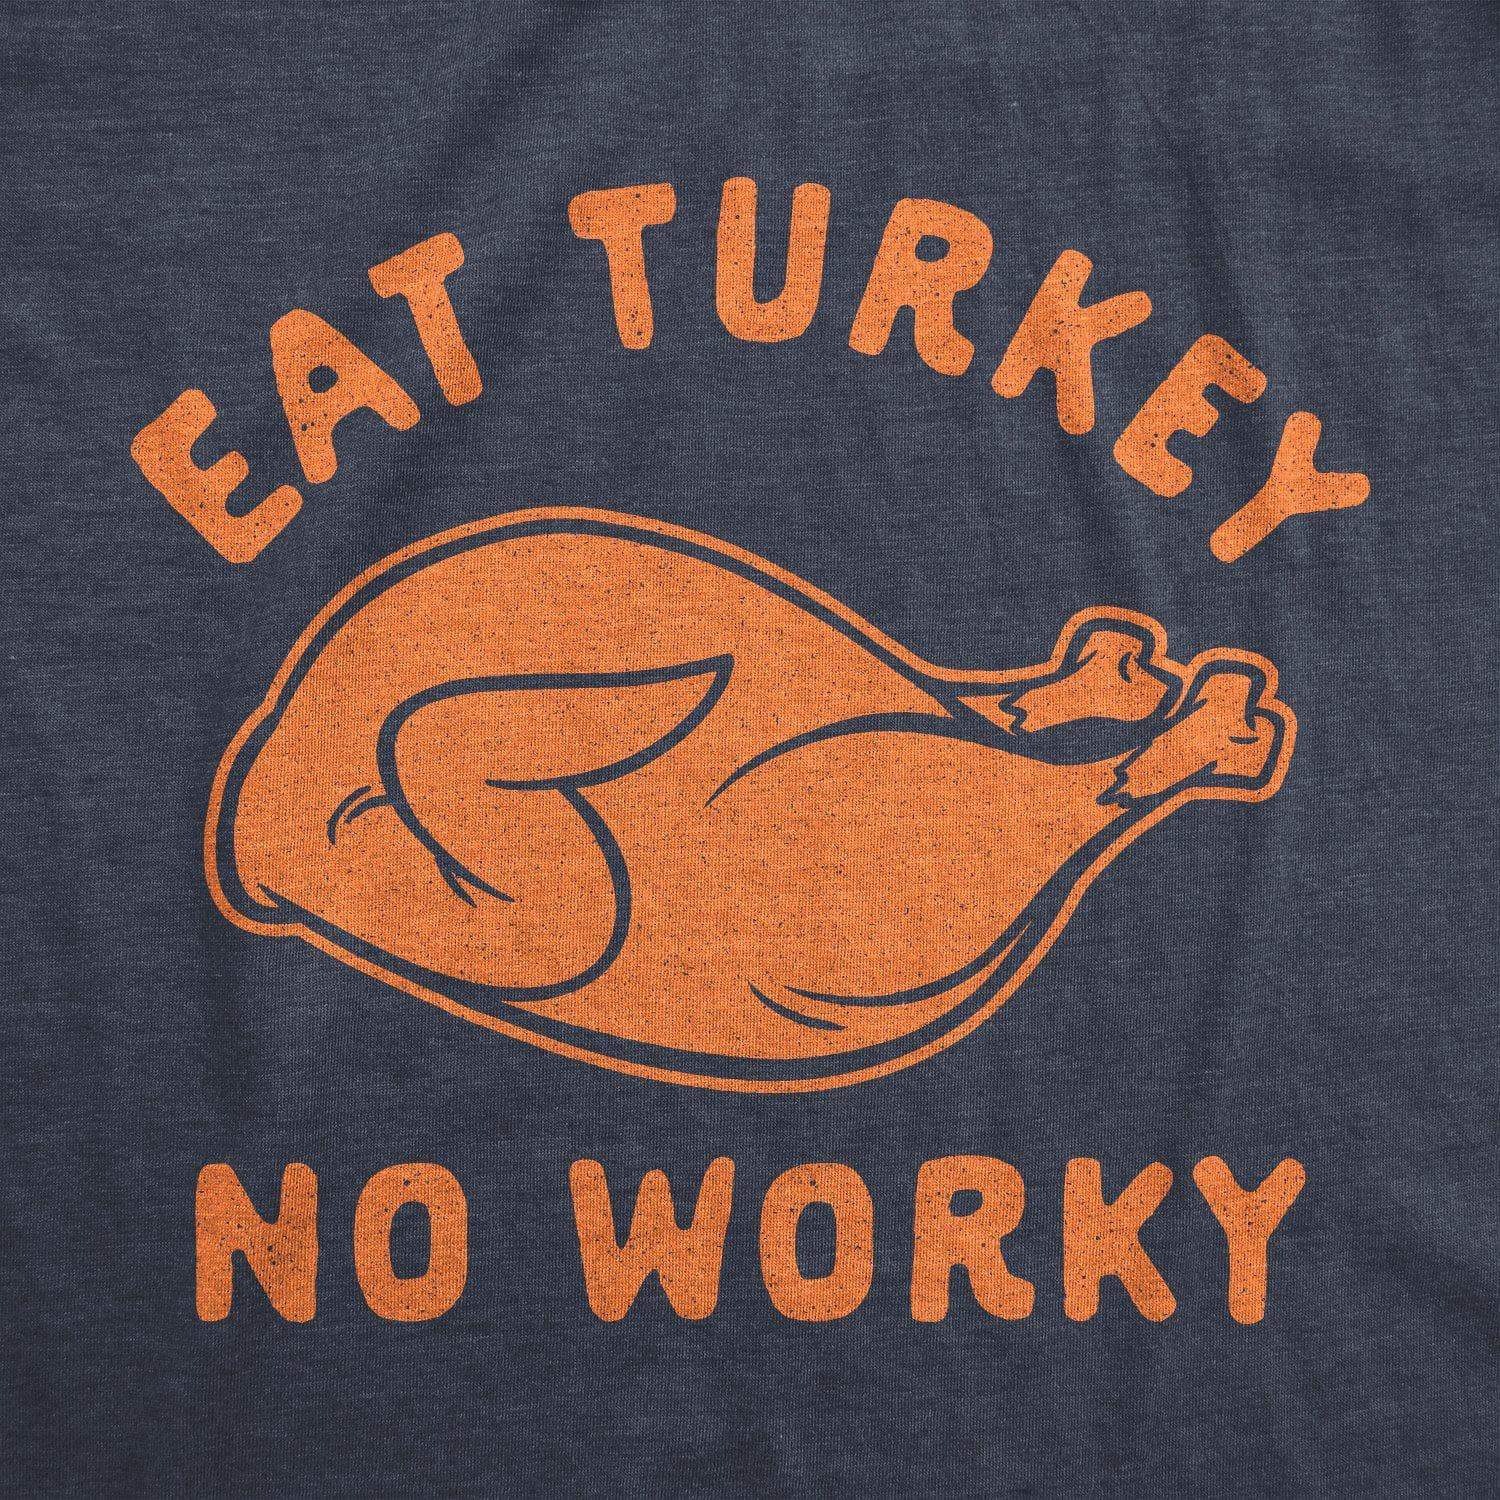 Eat Turkey No Worky Women's Tshirt - Crazy Dog T-Shirts